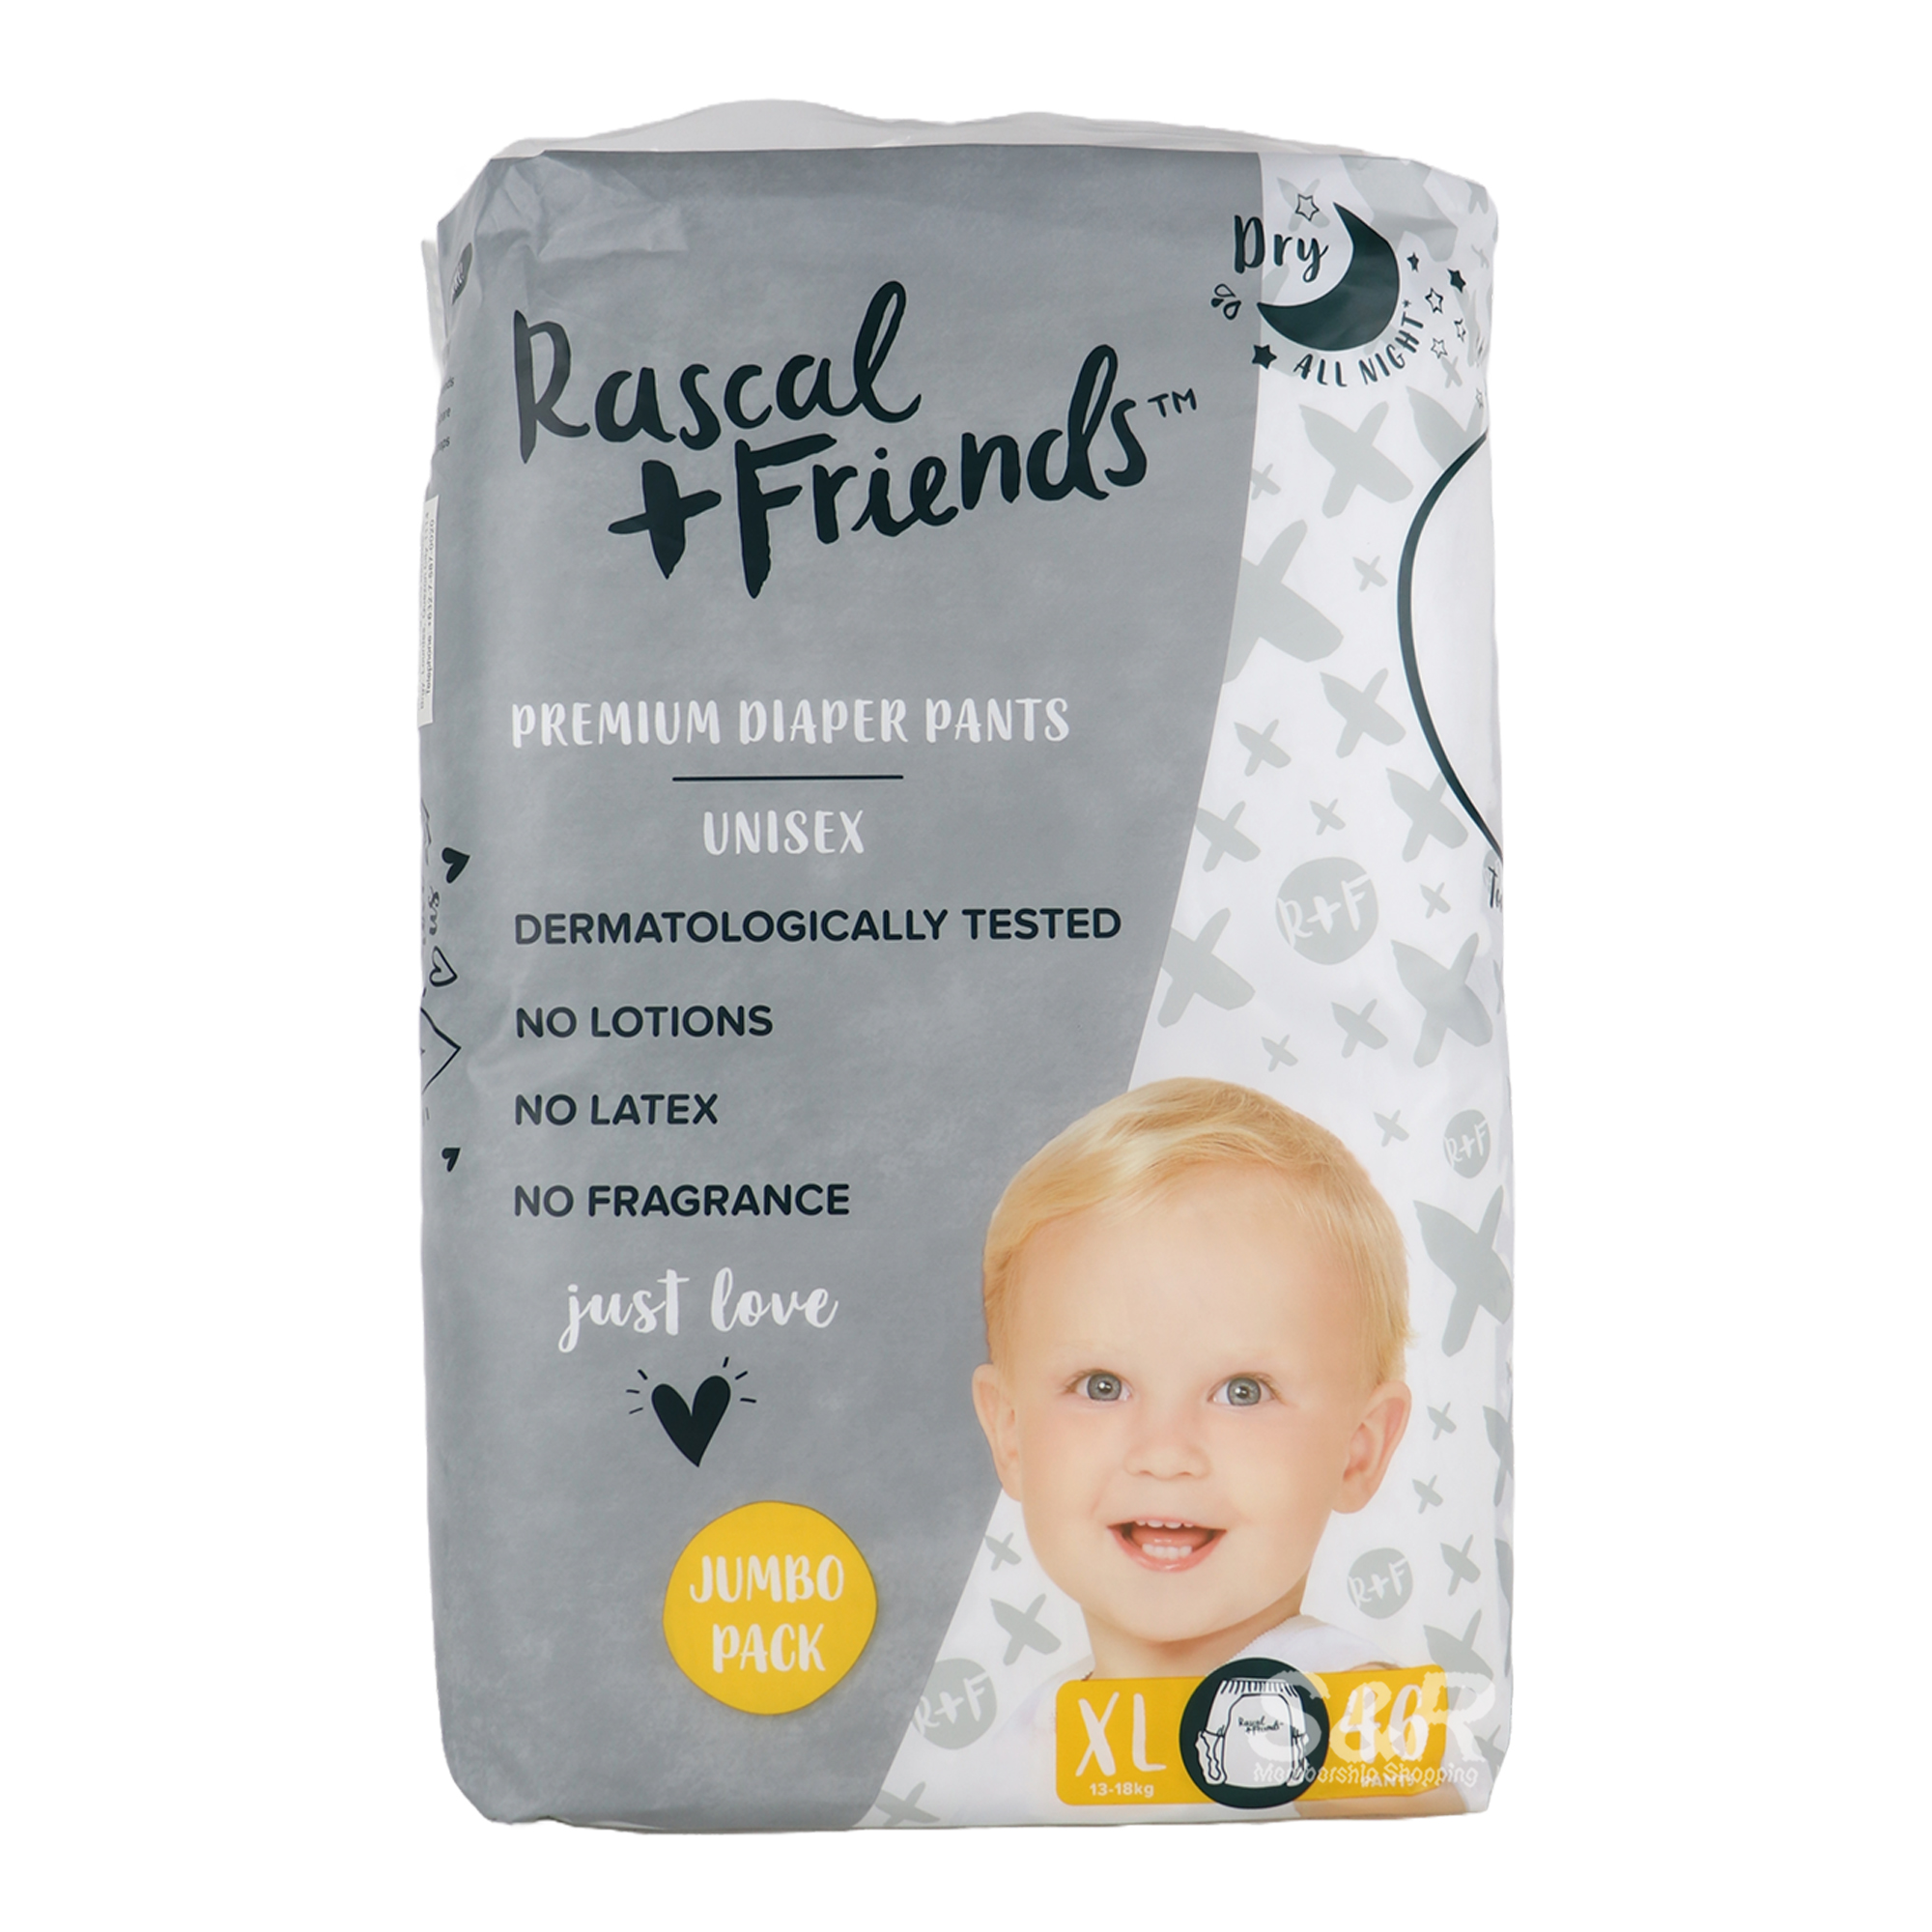 Rascal + Friends Premium Diaper Pants Extra Large 46pcs